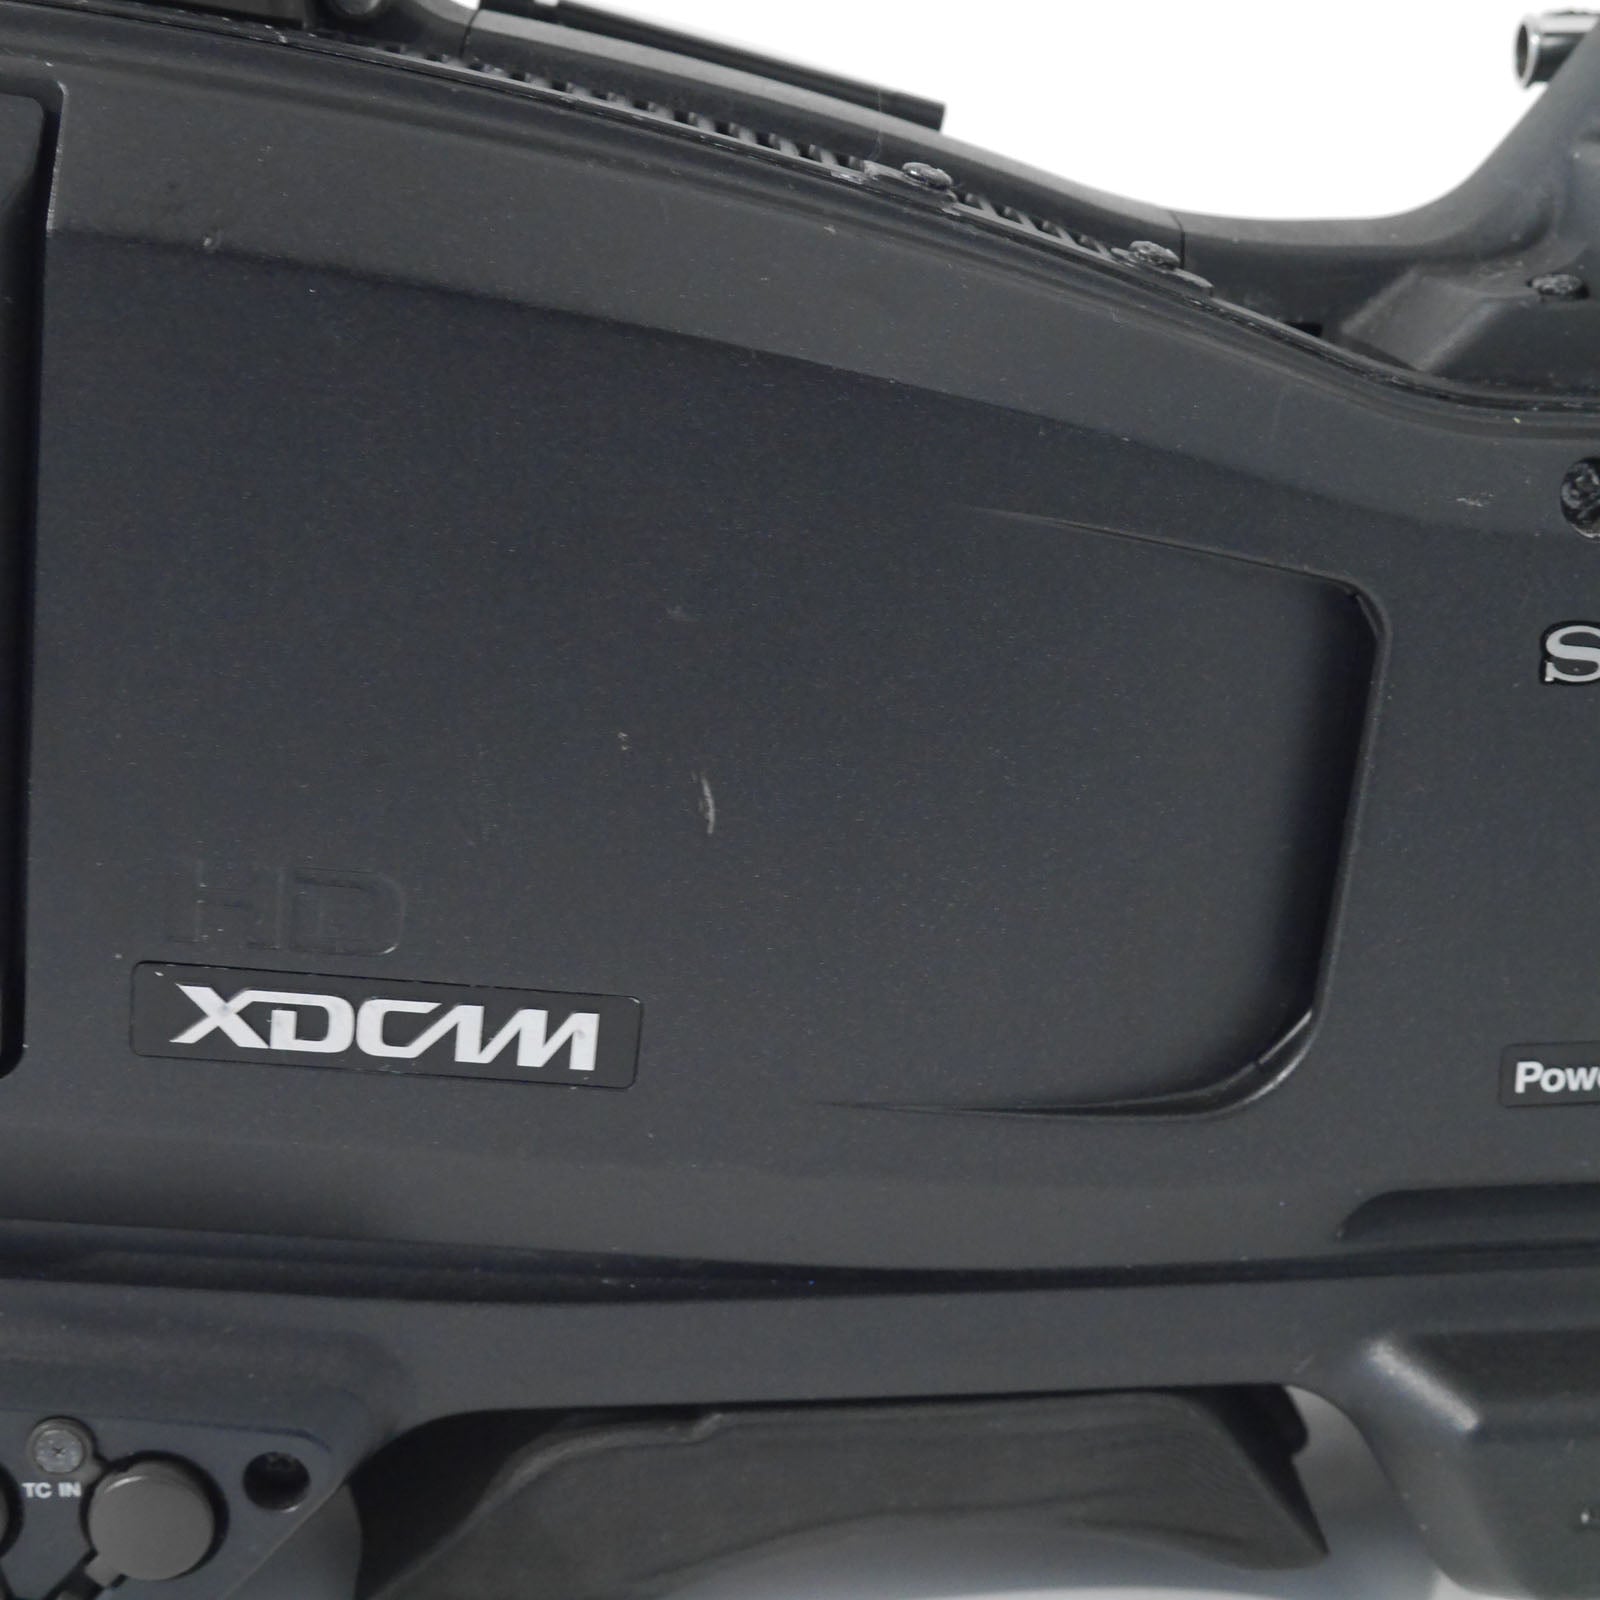 SONY(ソニー) XDCAM メモリーカムコーダー PMW-500 中古品